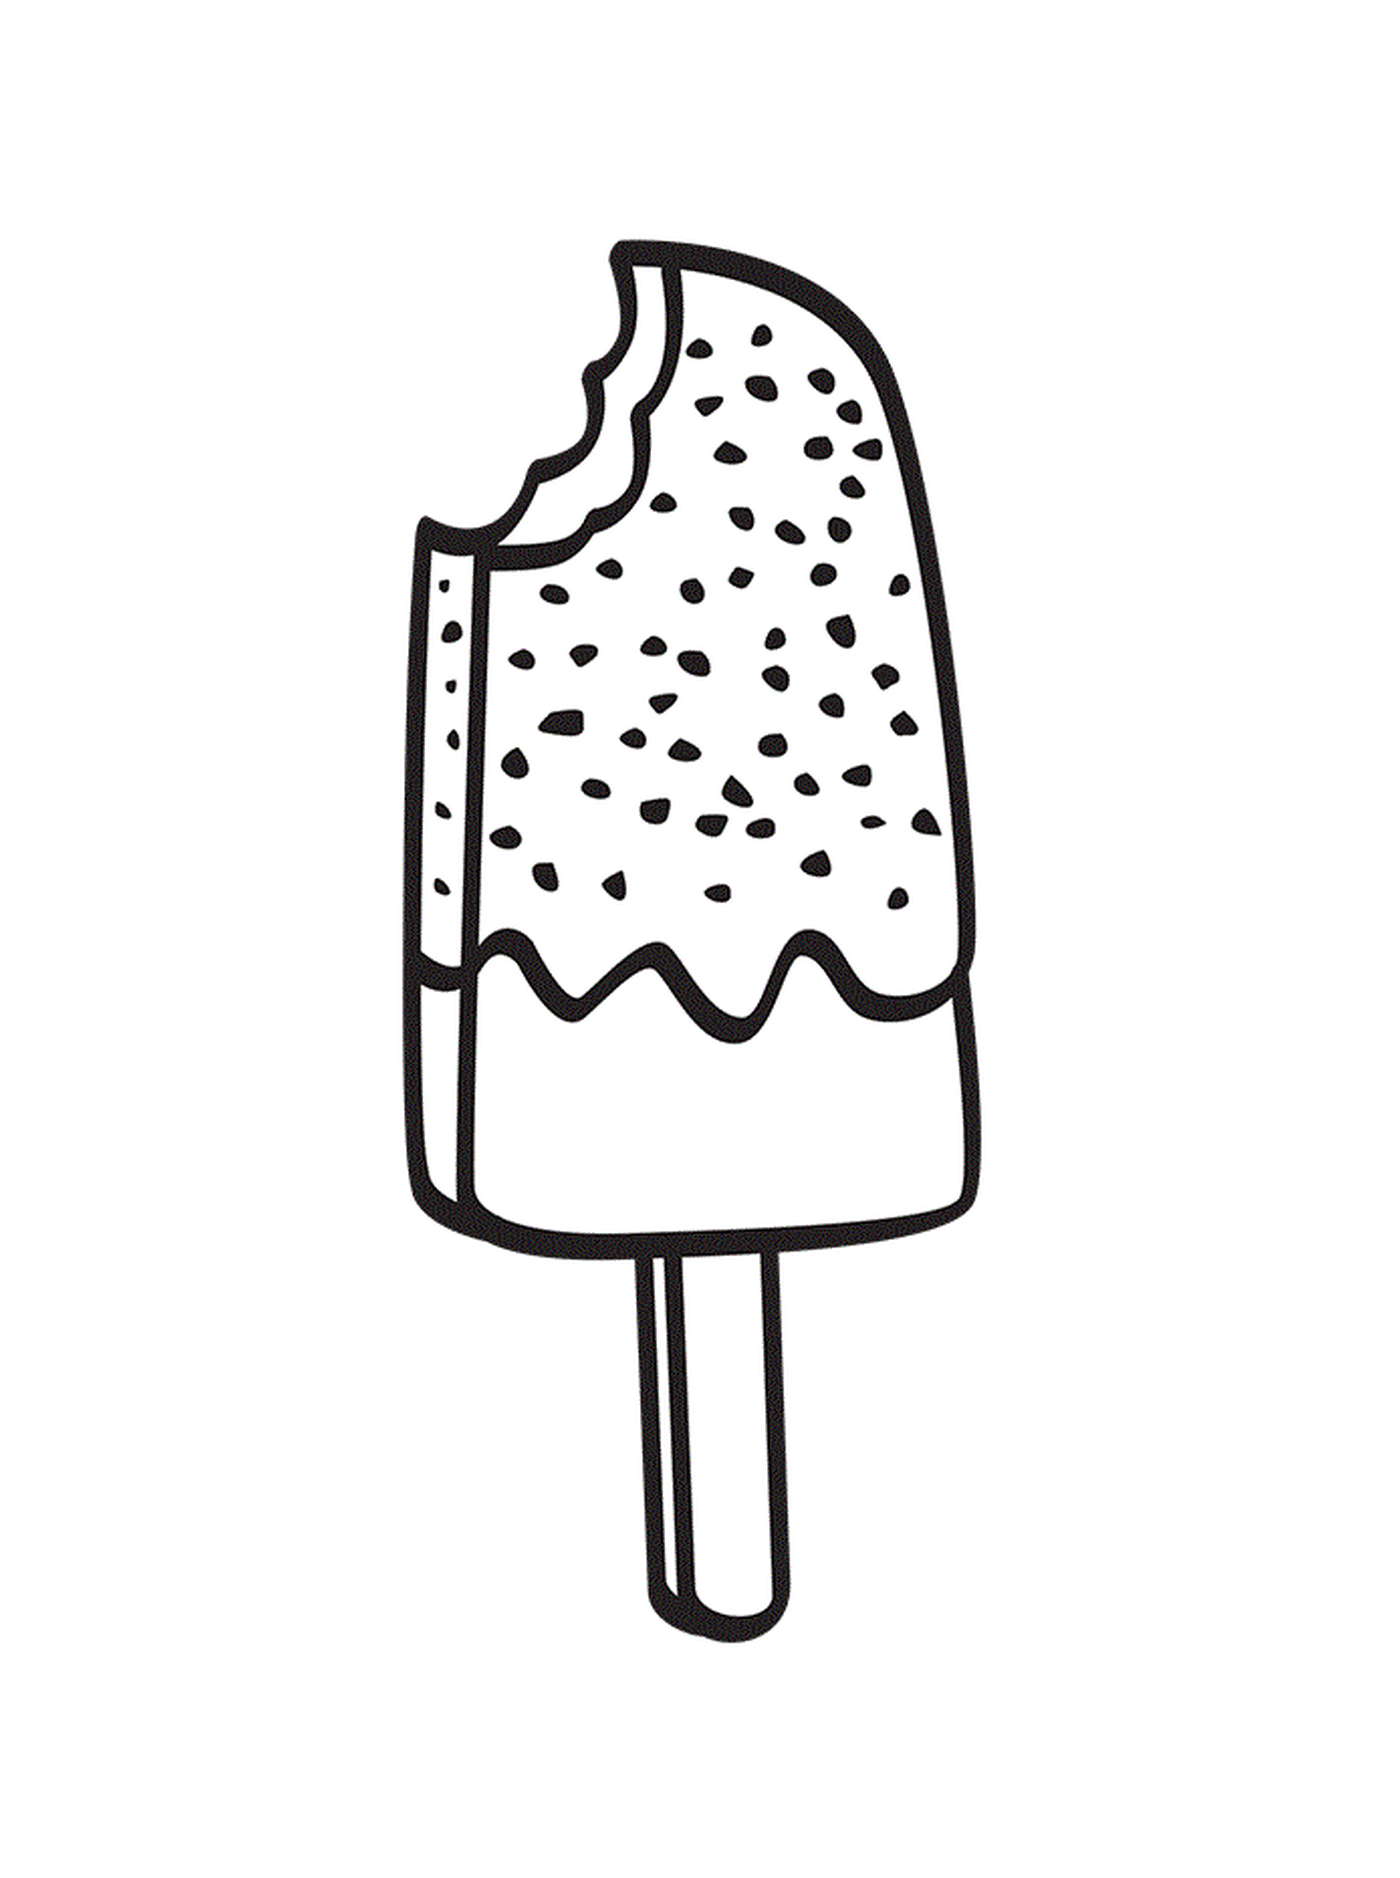  Un gelato cremoso su un bastone durante le vacanze estive 